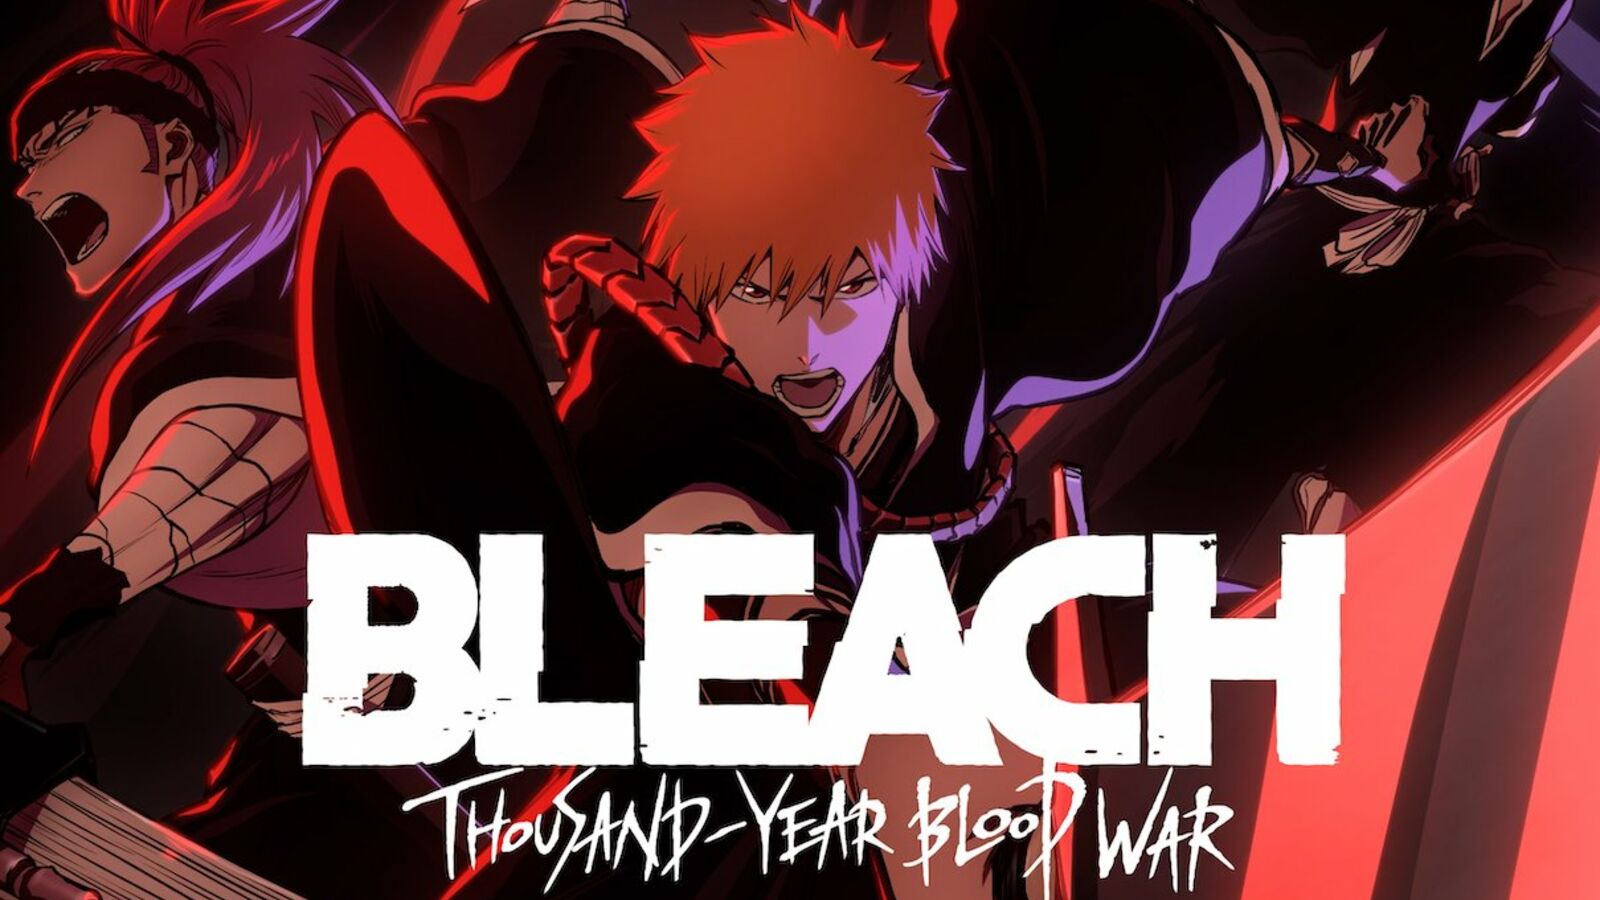 Disney signs on to air Bleach Thousand Year Blood War anime